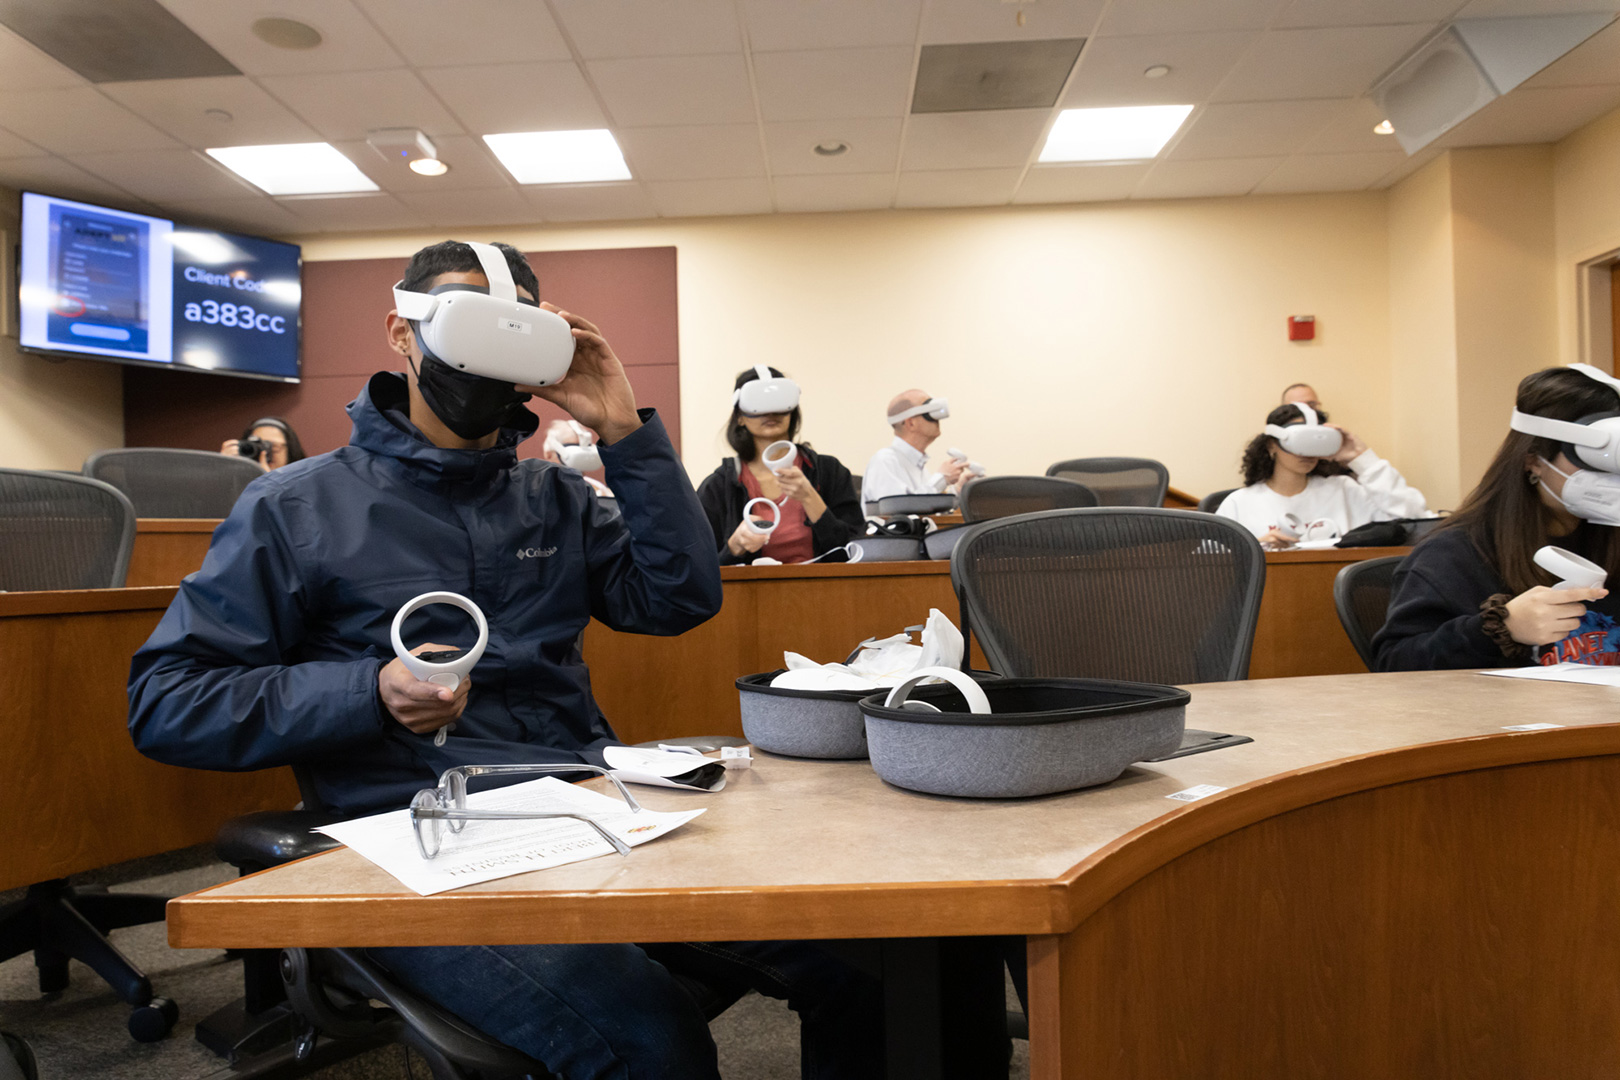 UMD Smith School students using VR